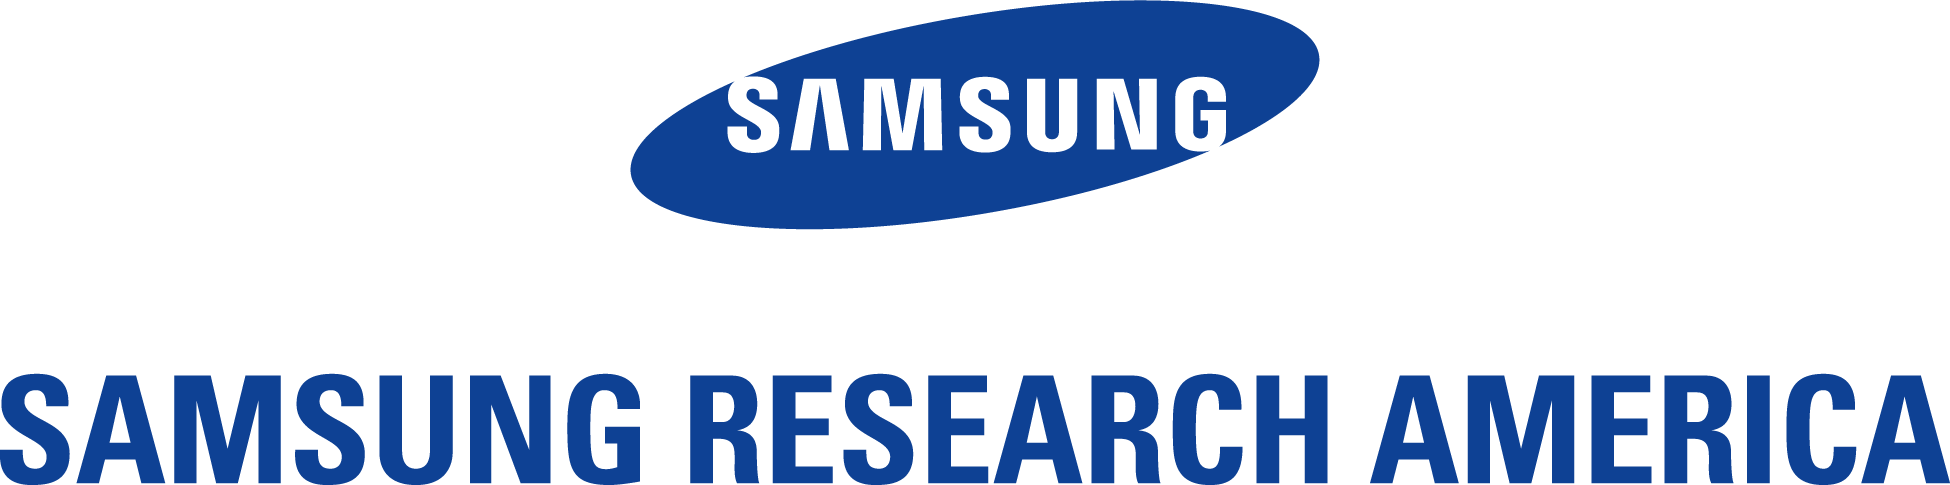 Samsung Research Logo - Customer Stories: Samsung Research America Customer Story